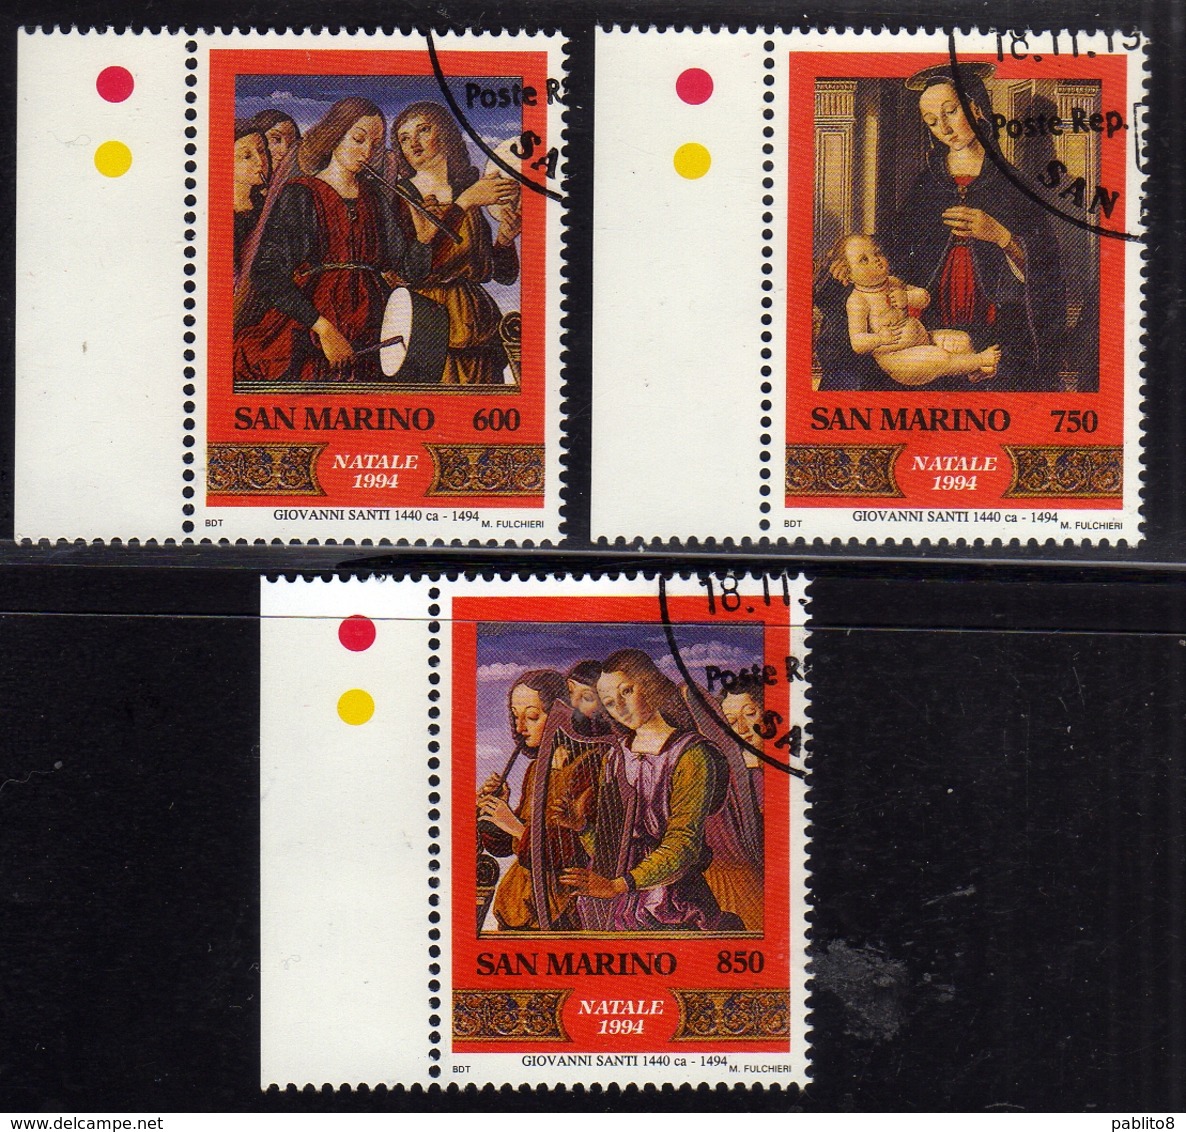 REPUBBLICA DI SAN MARINO 1994 NATALE CHRISTMAS NOEL WEIHNACHTEN NAVIDAD SERIE COMPLETA COMPLETE SET USATA USED OBLITERE' - Used Stamps